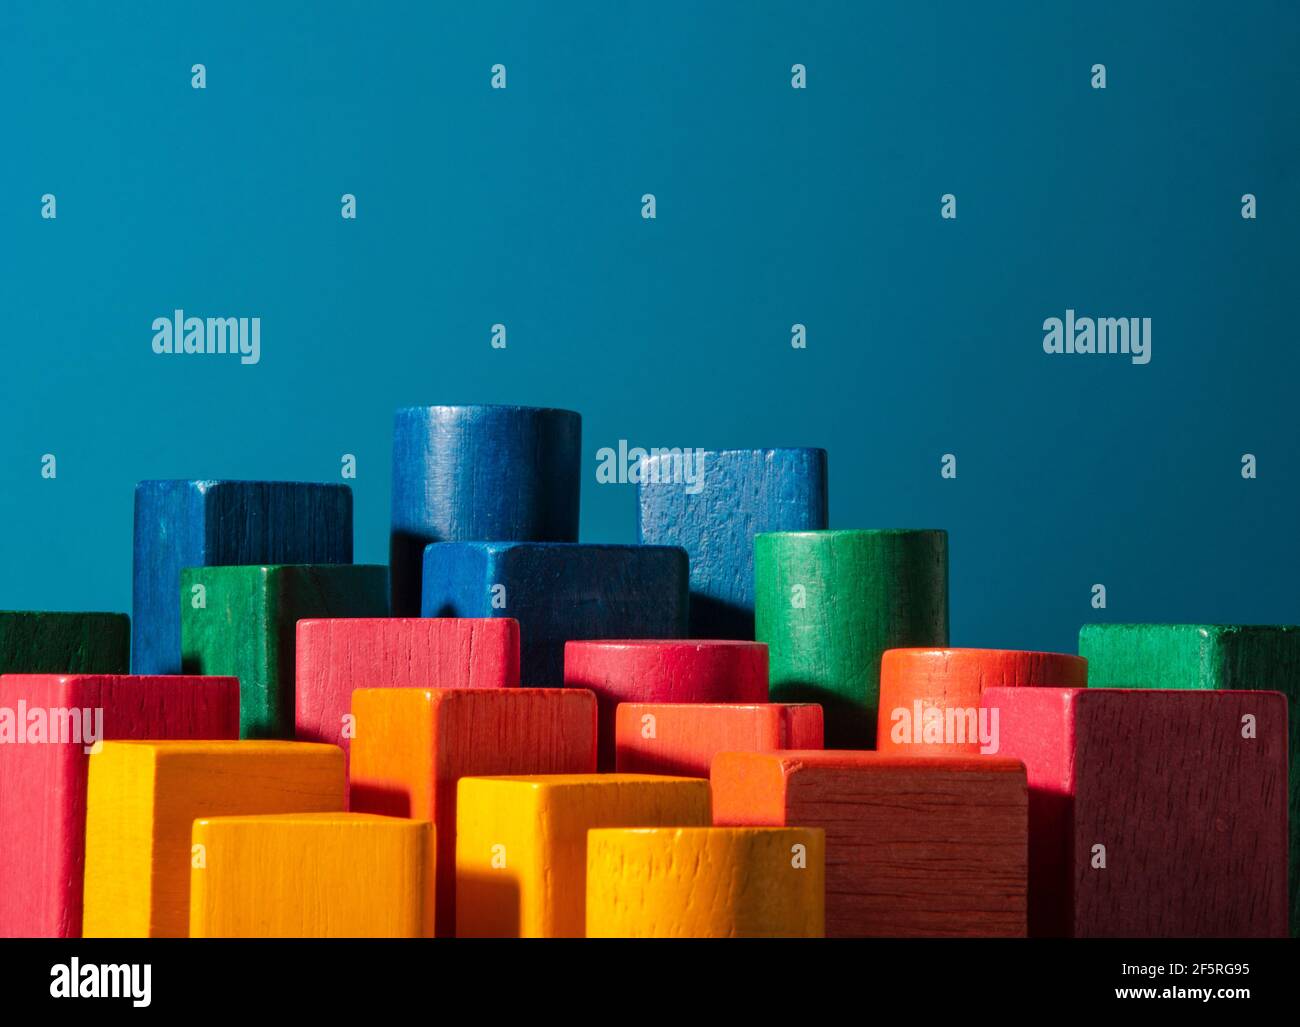 Toy of colored wood blocks. Skyscraper metaphor Stock Photo